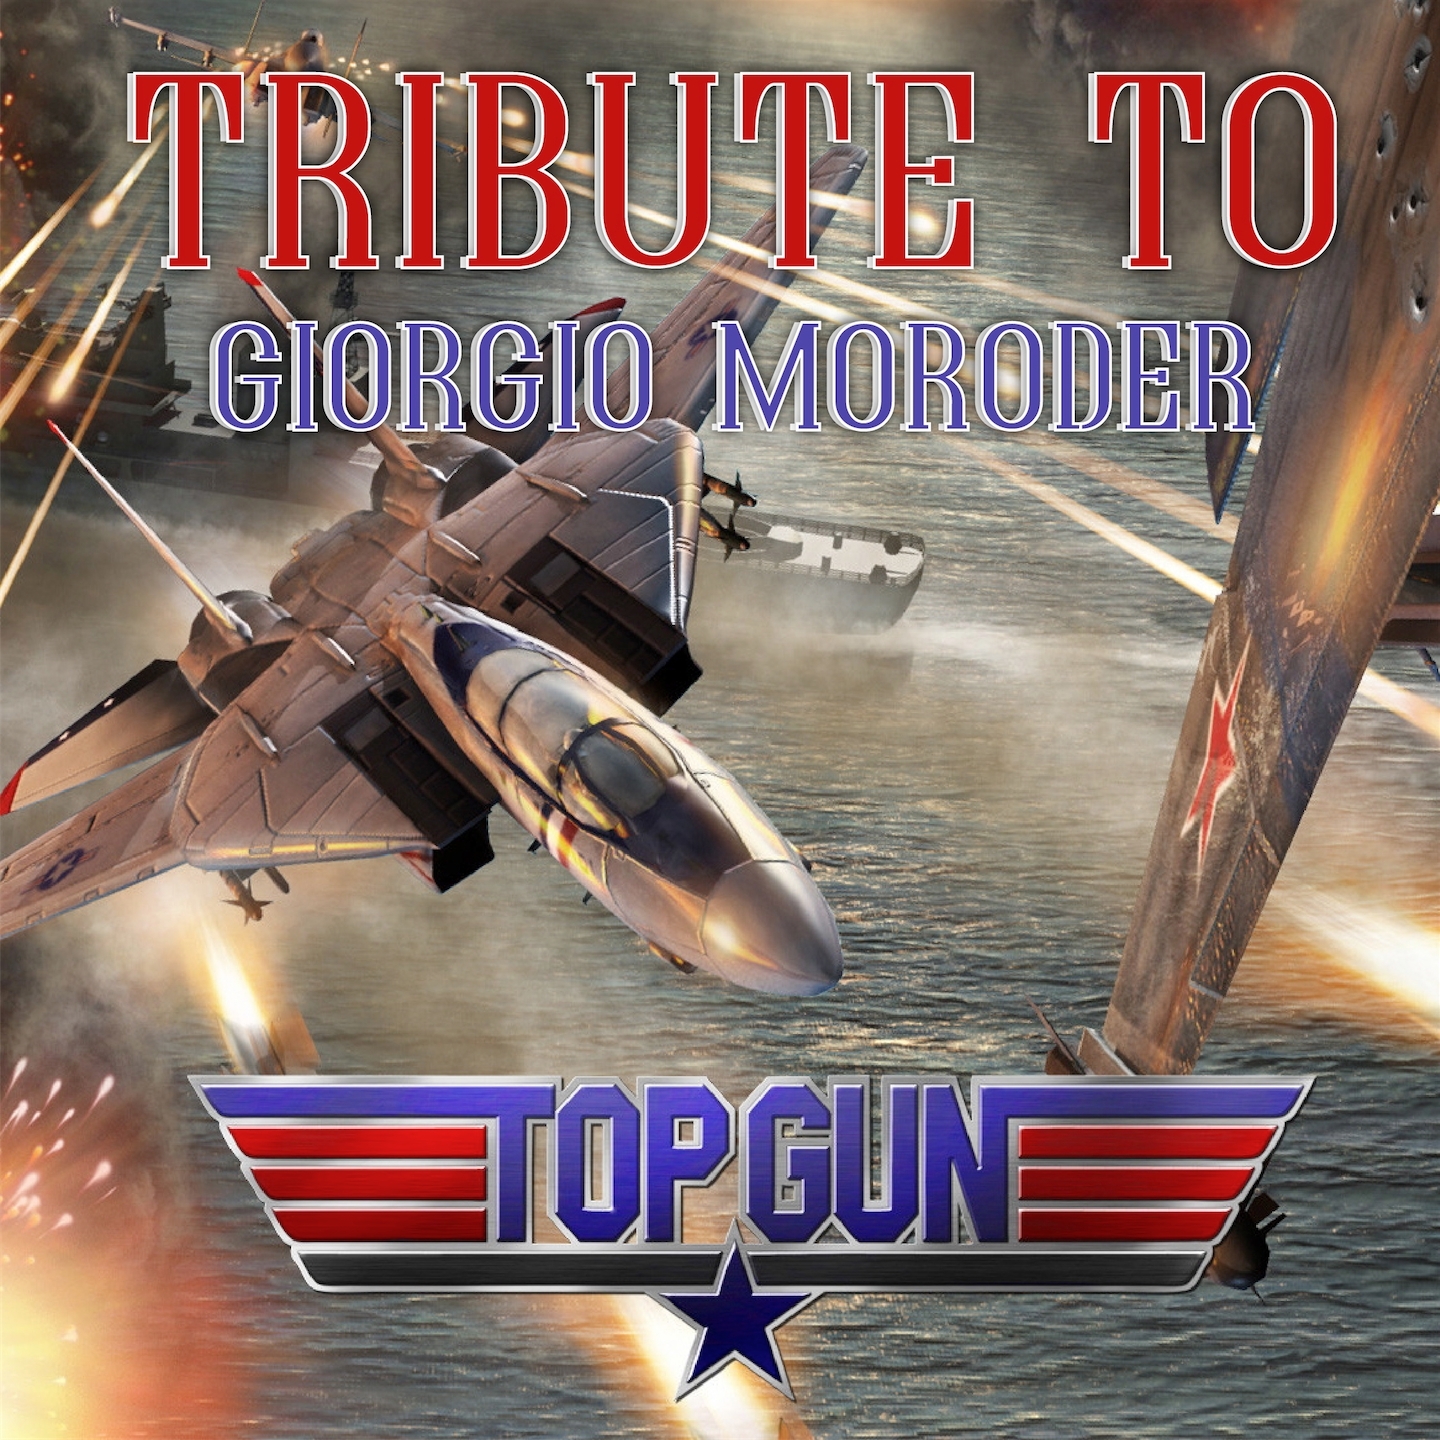 Top Gun Compilation - Tribute to Giorgio Moroder